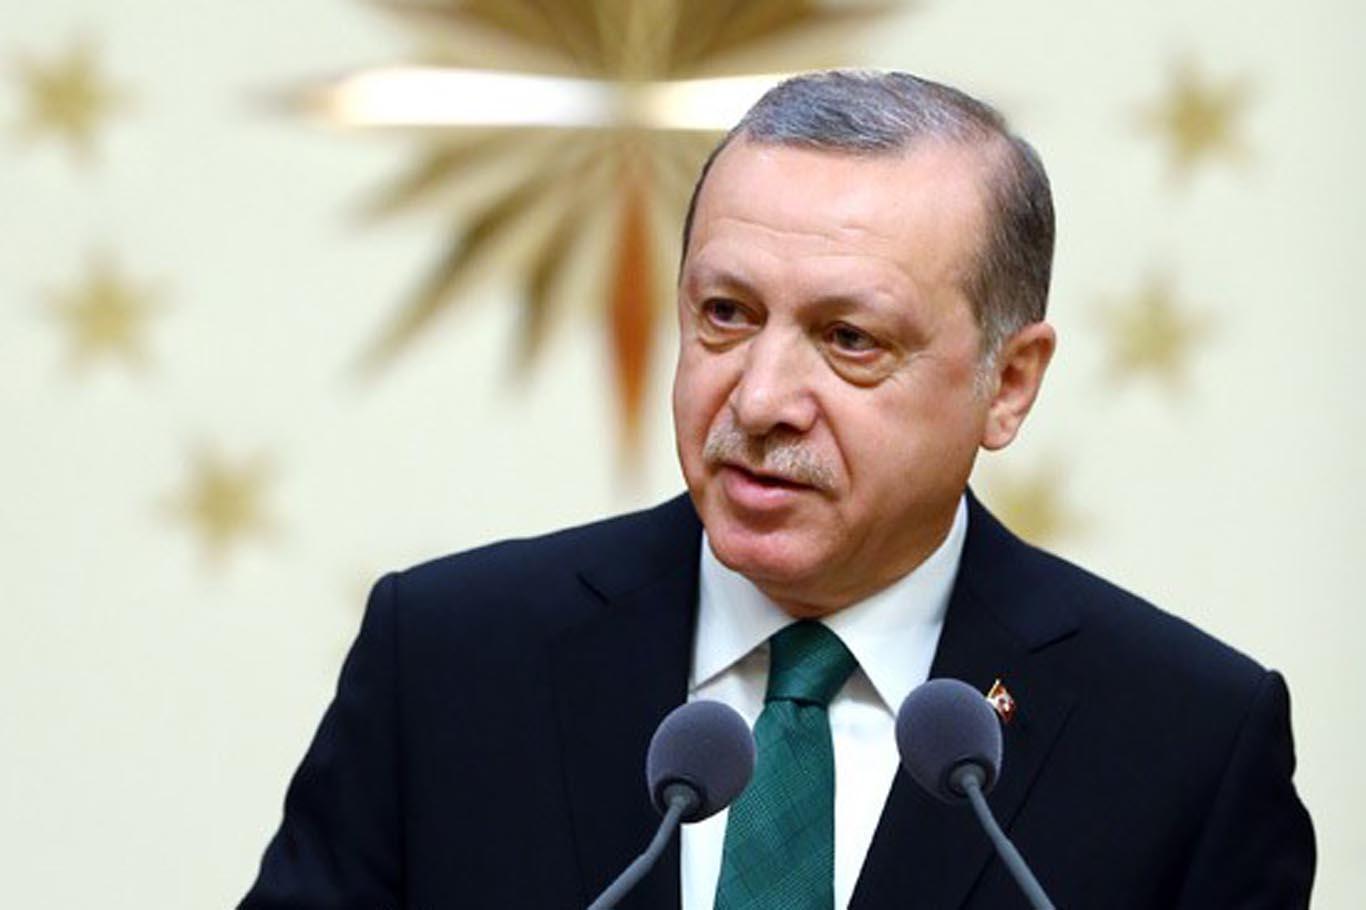 Erdoğan lifts Turkey's weekend curfew for 15 cities